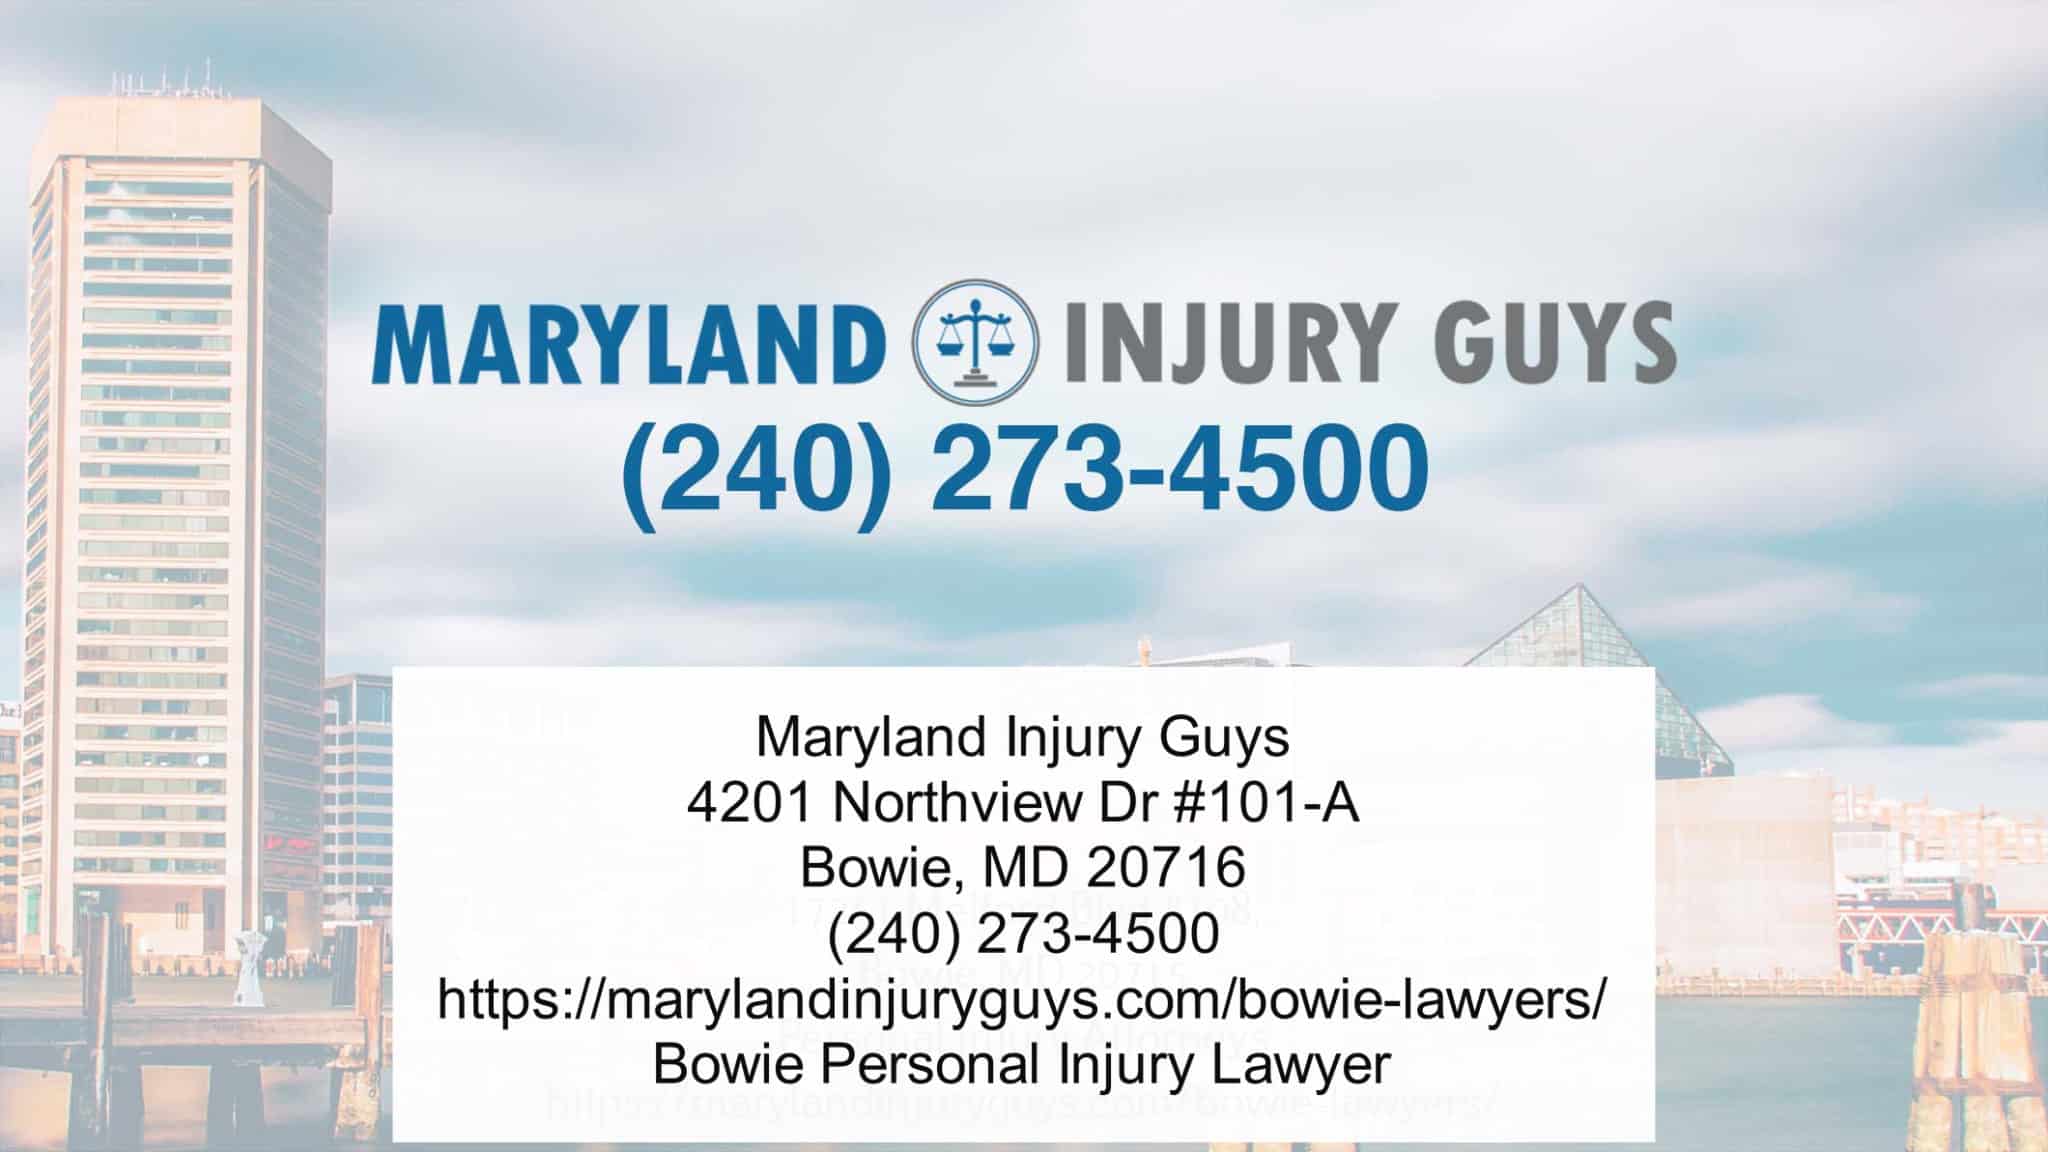 Personal-Injury-Lawyer-Near-Me-Bowie-Maryland-Injury-Guys-scaled-1.jpg